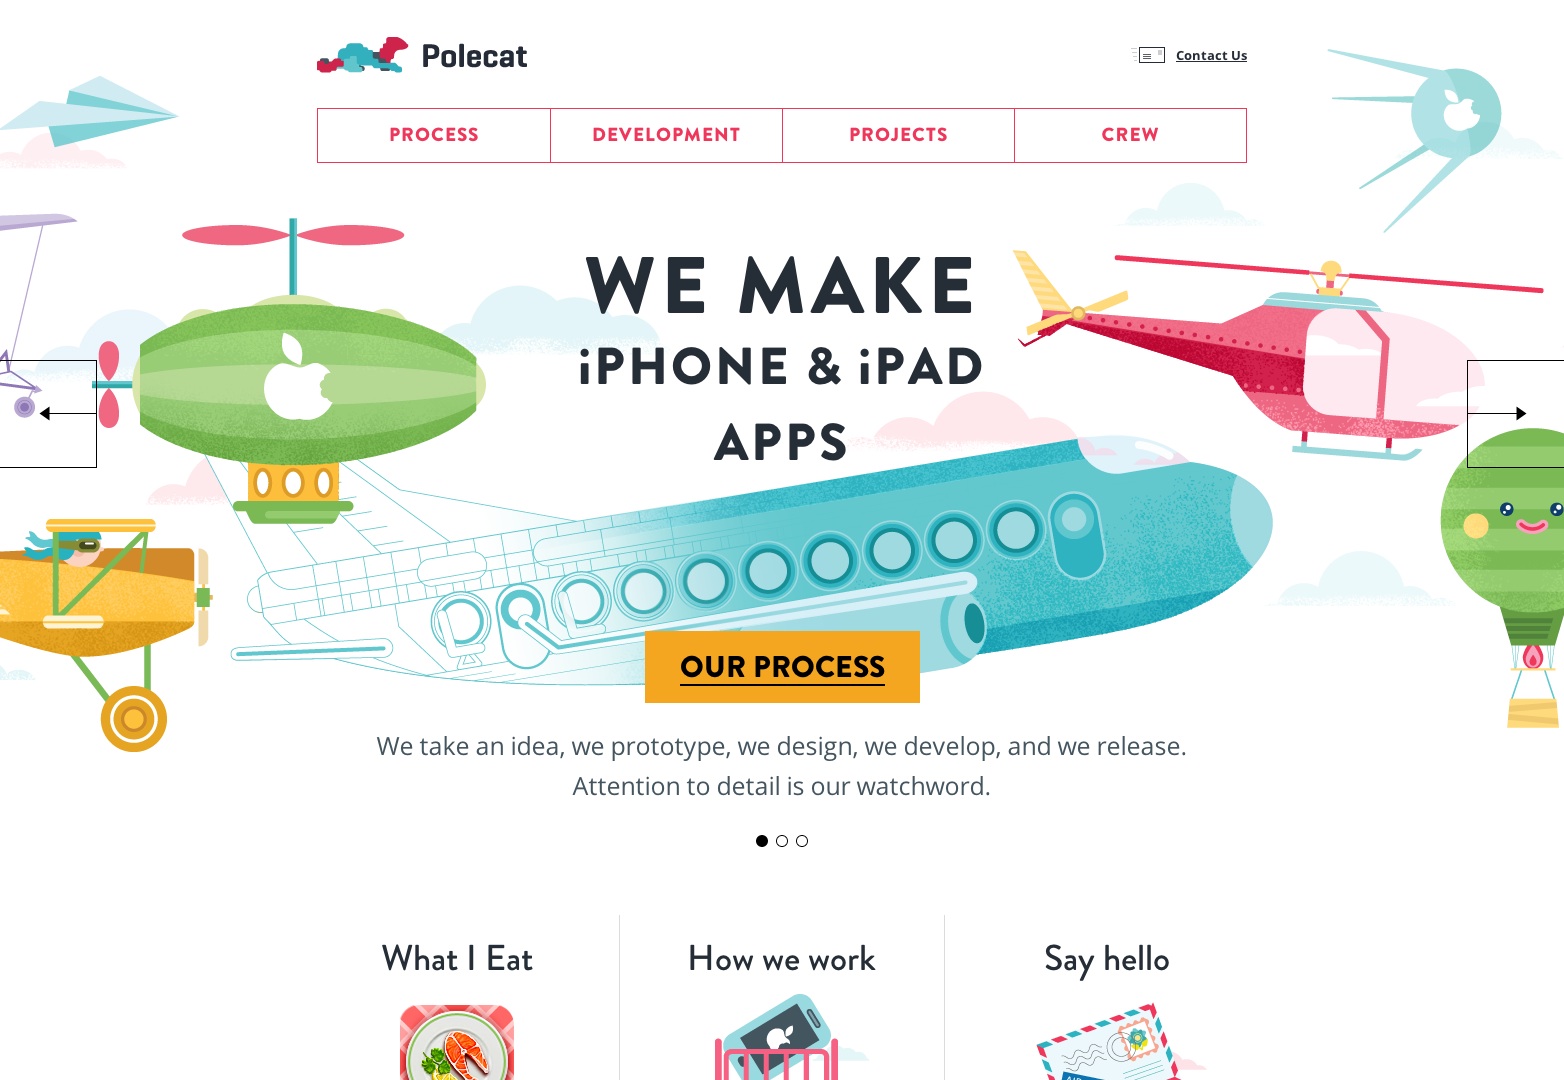 Custom iPhone and iPad apps development | Polecat agency